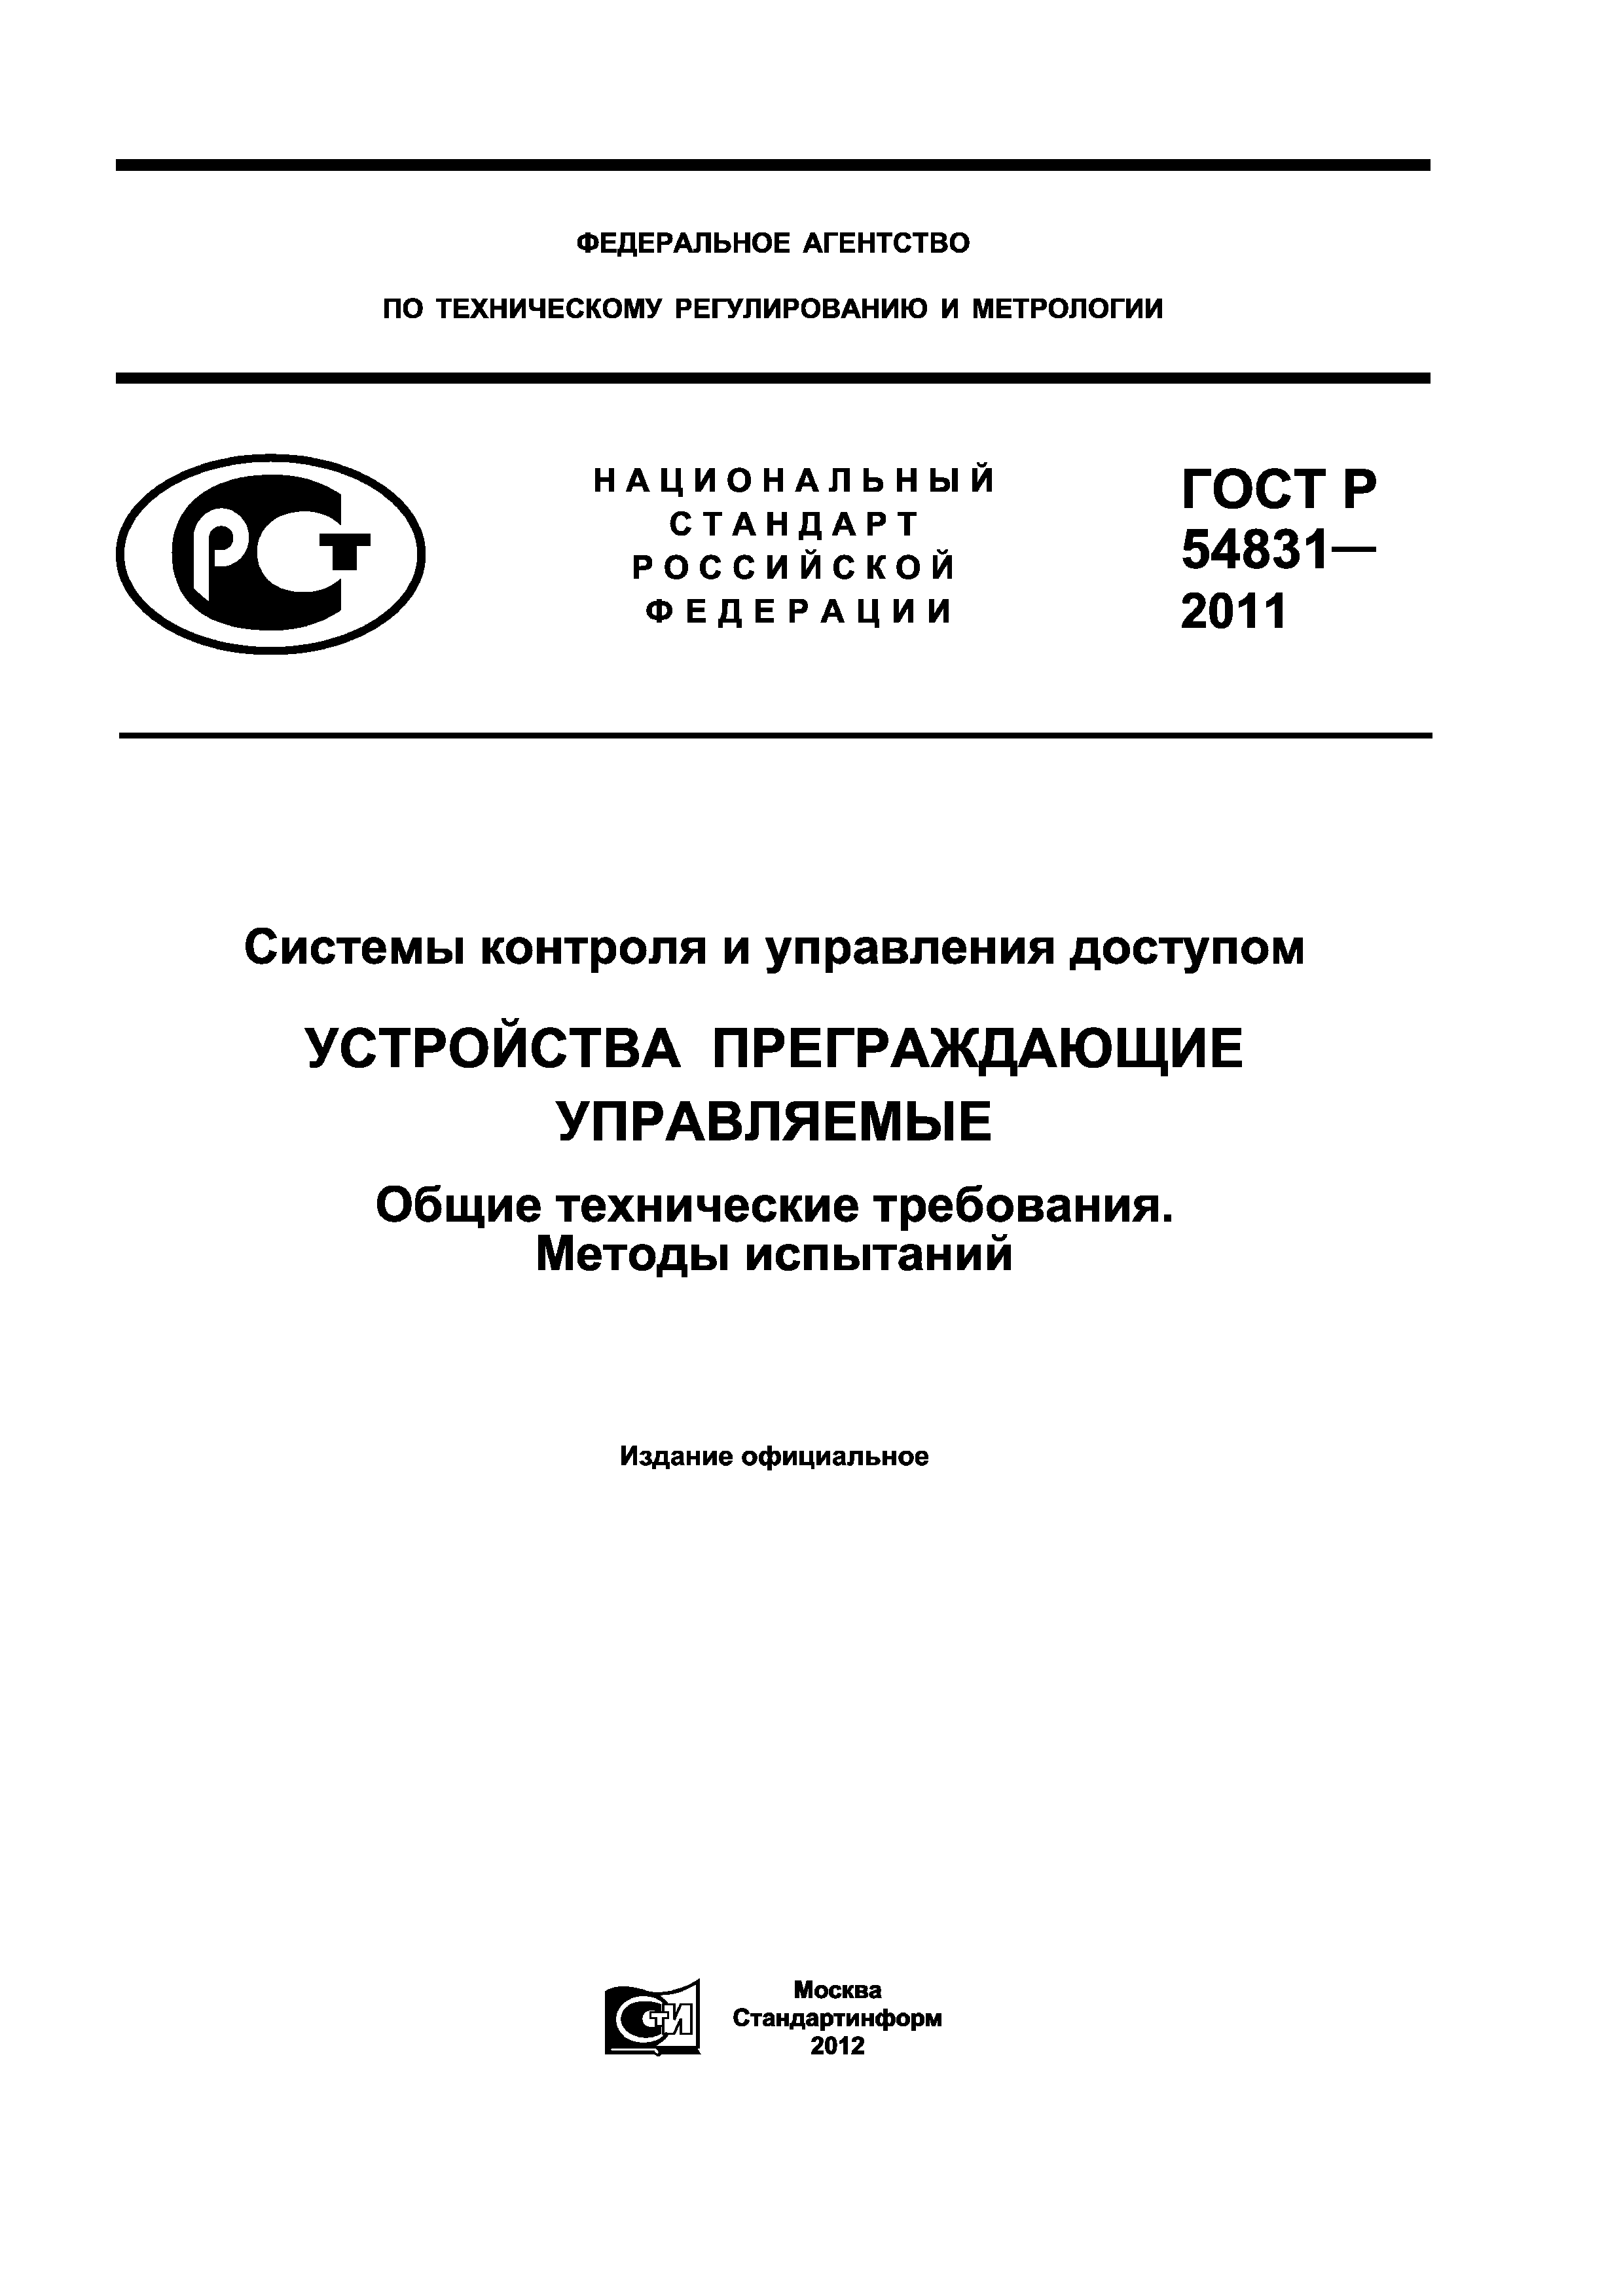 ГОСТ Р 54831-2011